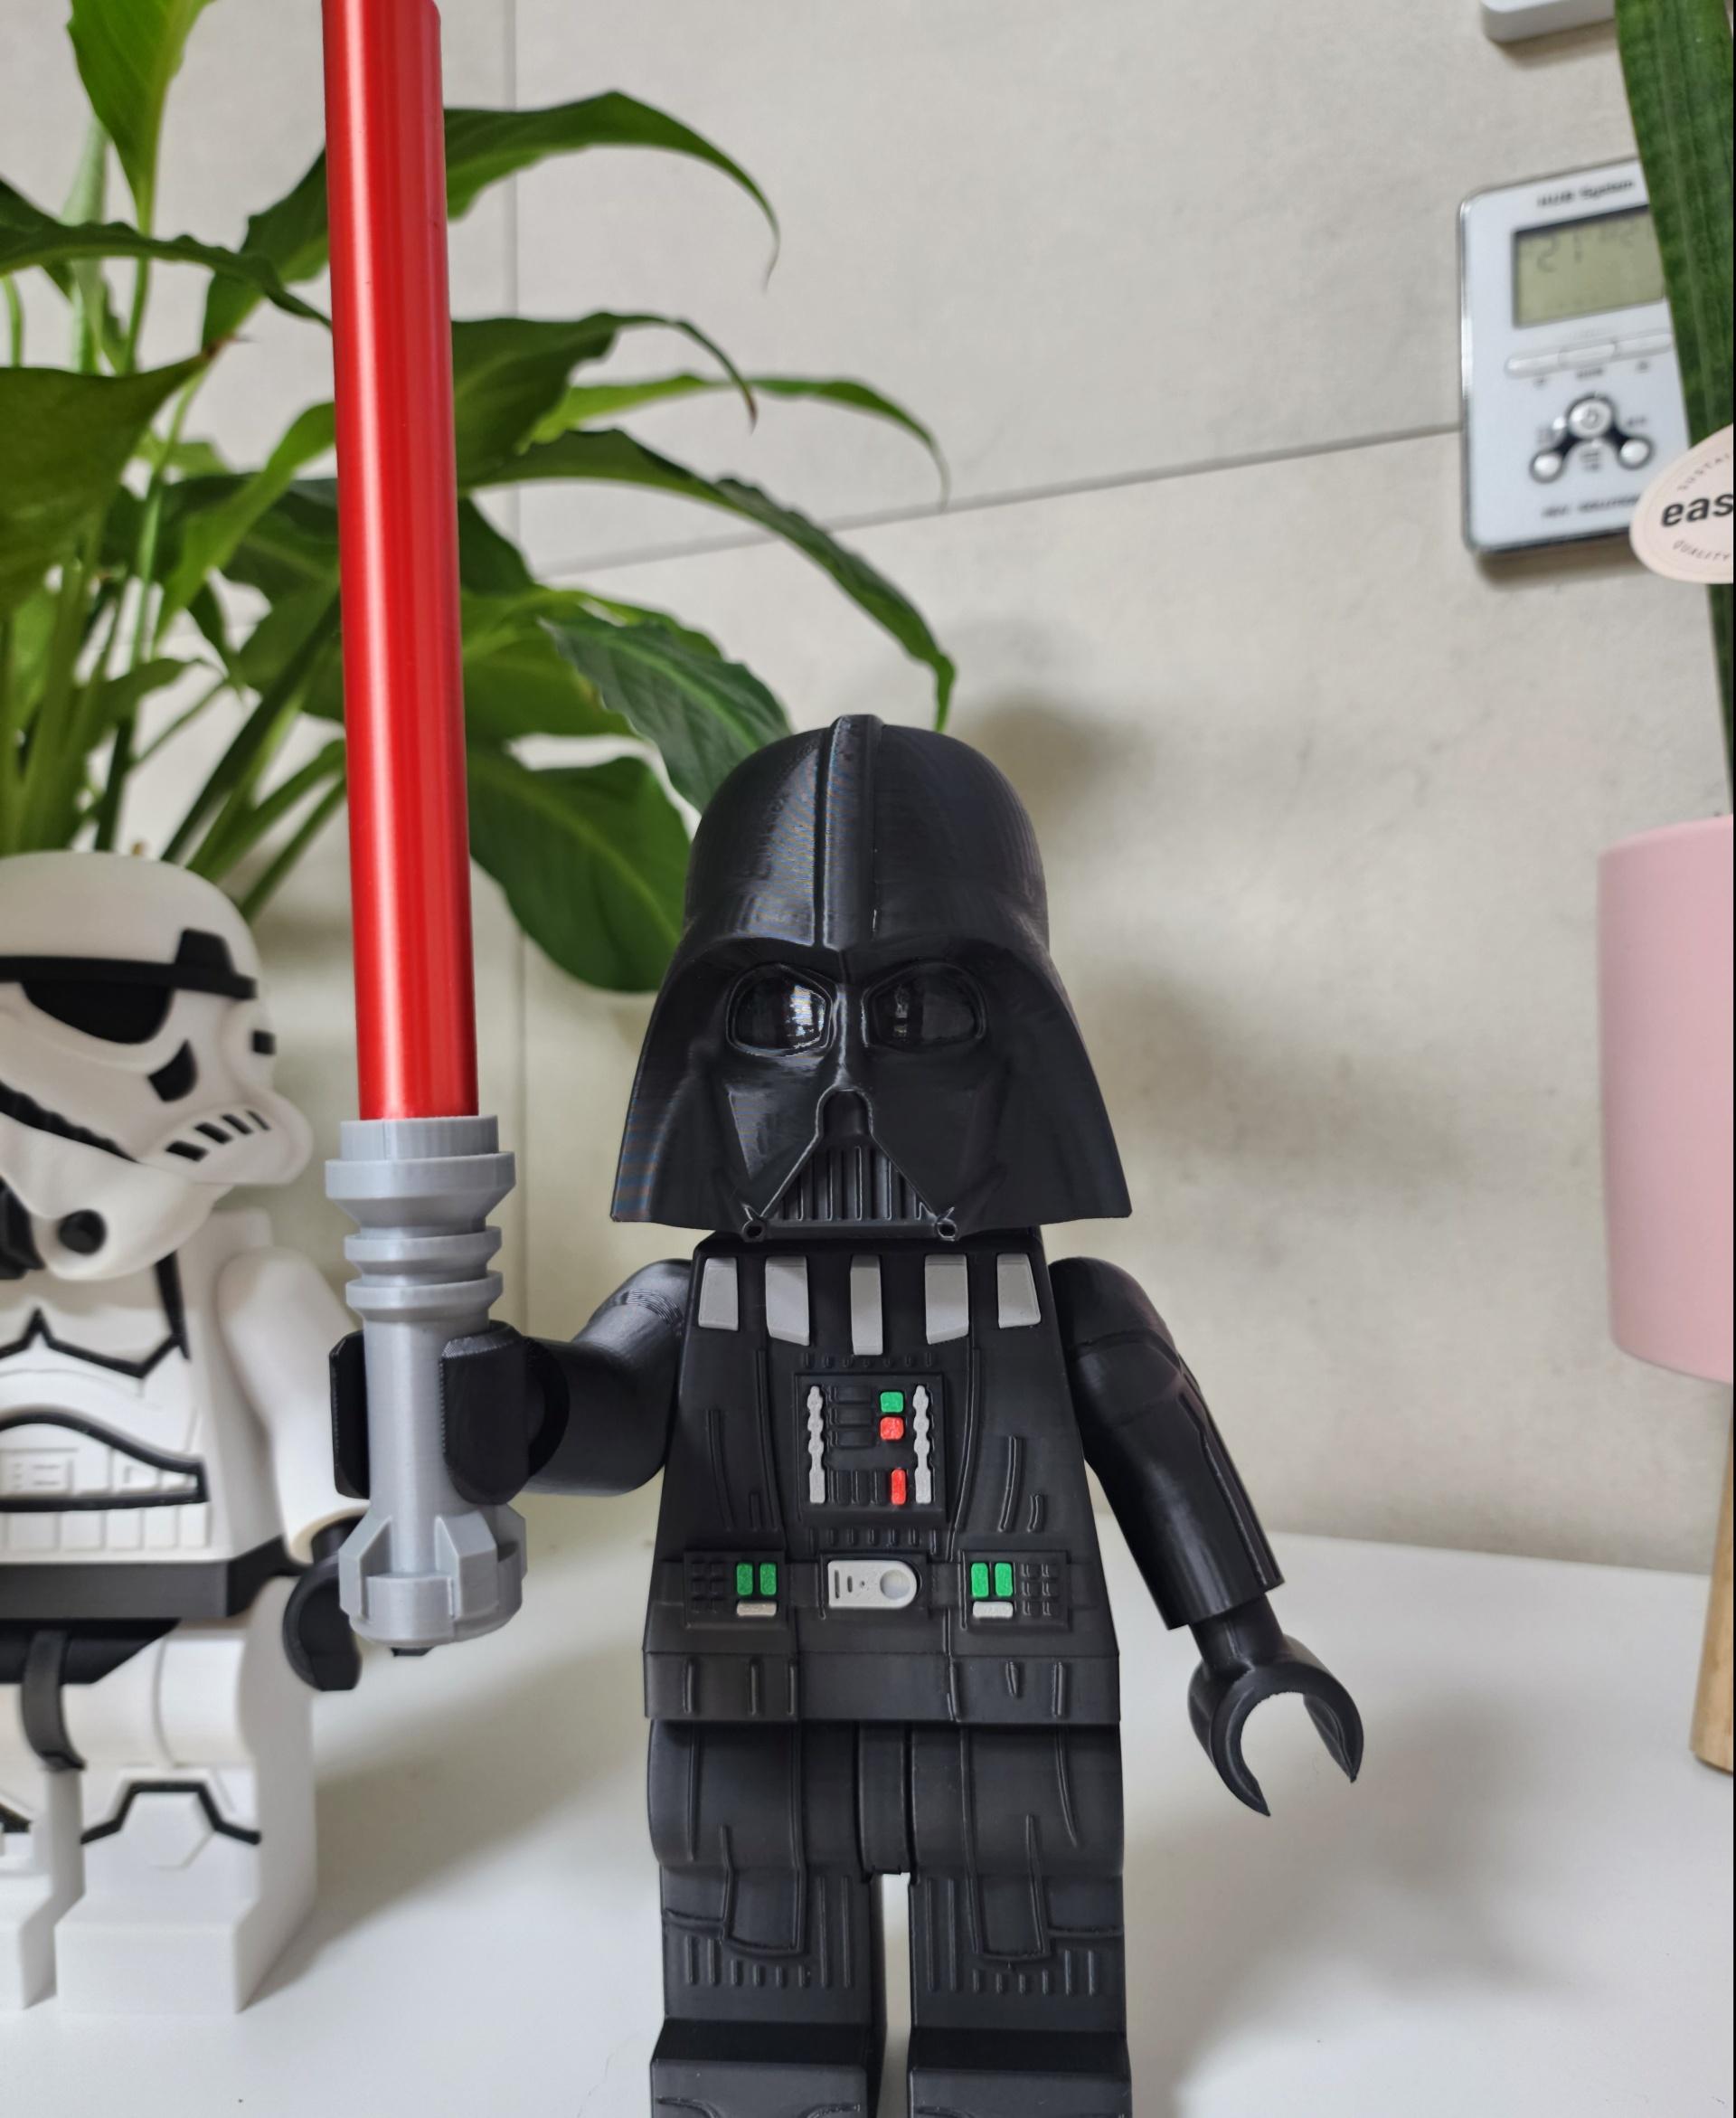 Darth Vader (6:1 LEGO-inspired brick figure, NO MMU/AMS, NO supports, NO glue) - Good - 3d model